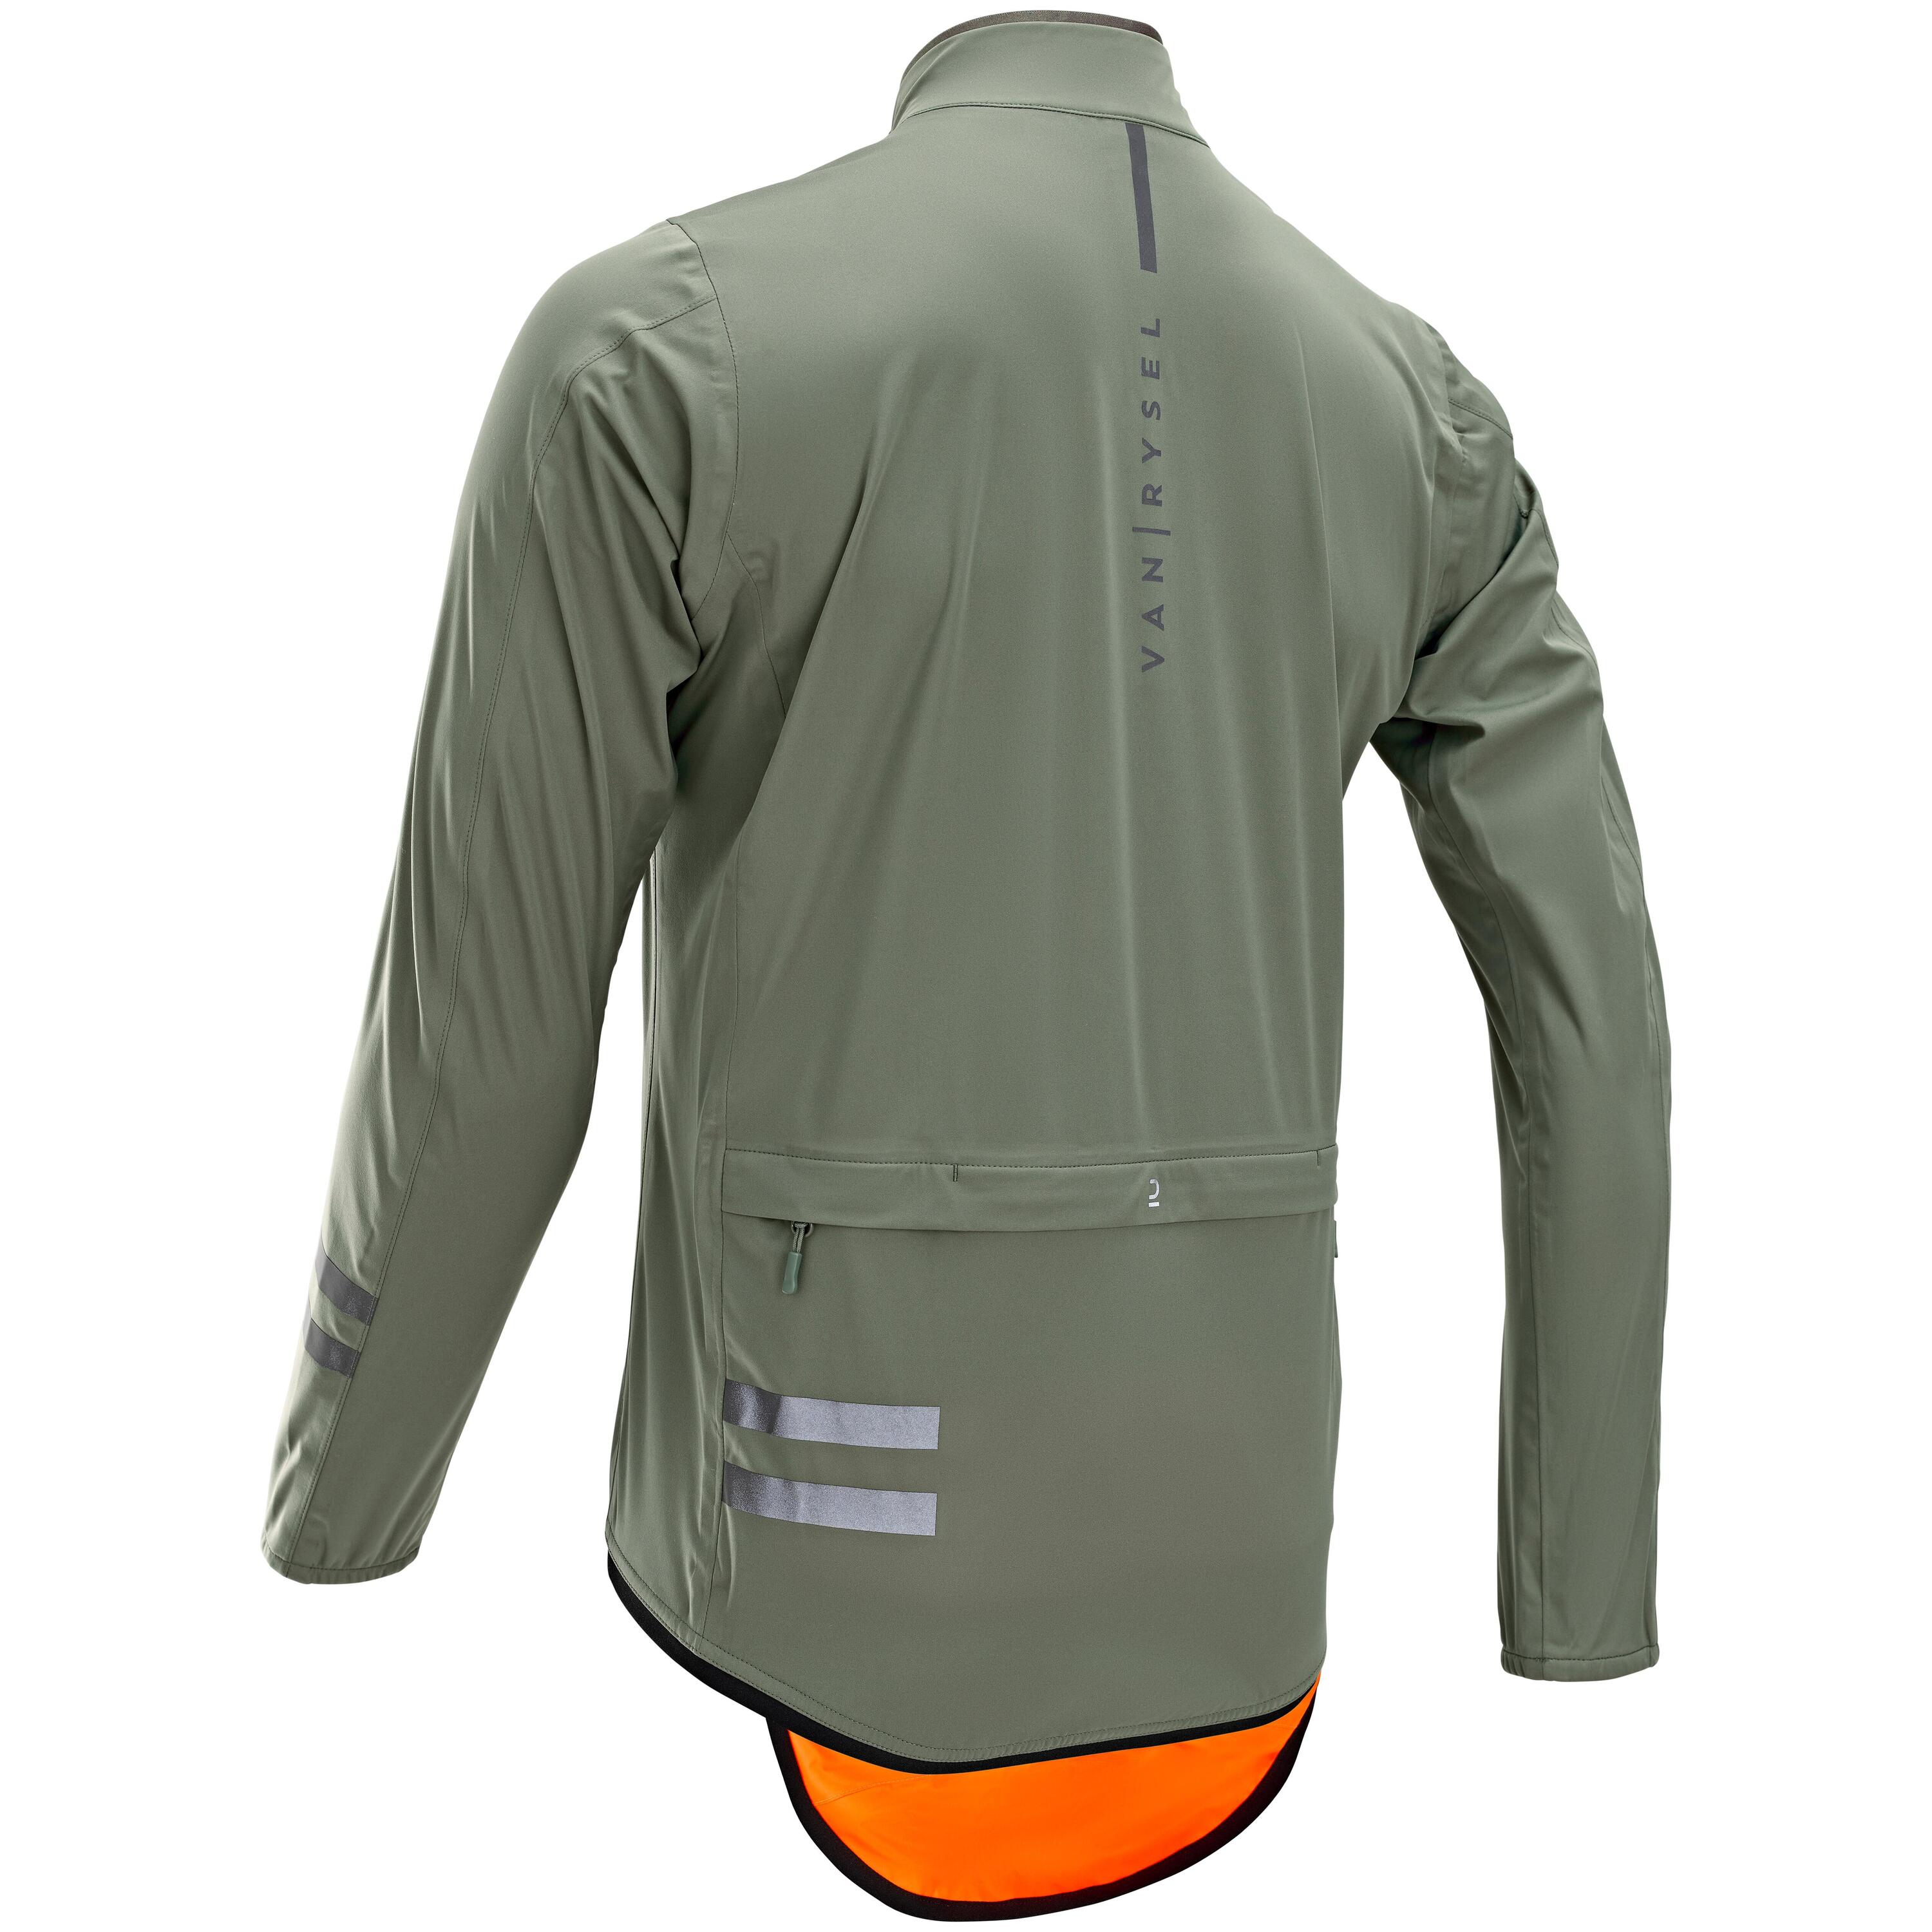 Men's Long-Sleeved Showerproof Road Cycling Jacket RC 500 - Khaki 4/8